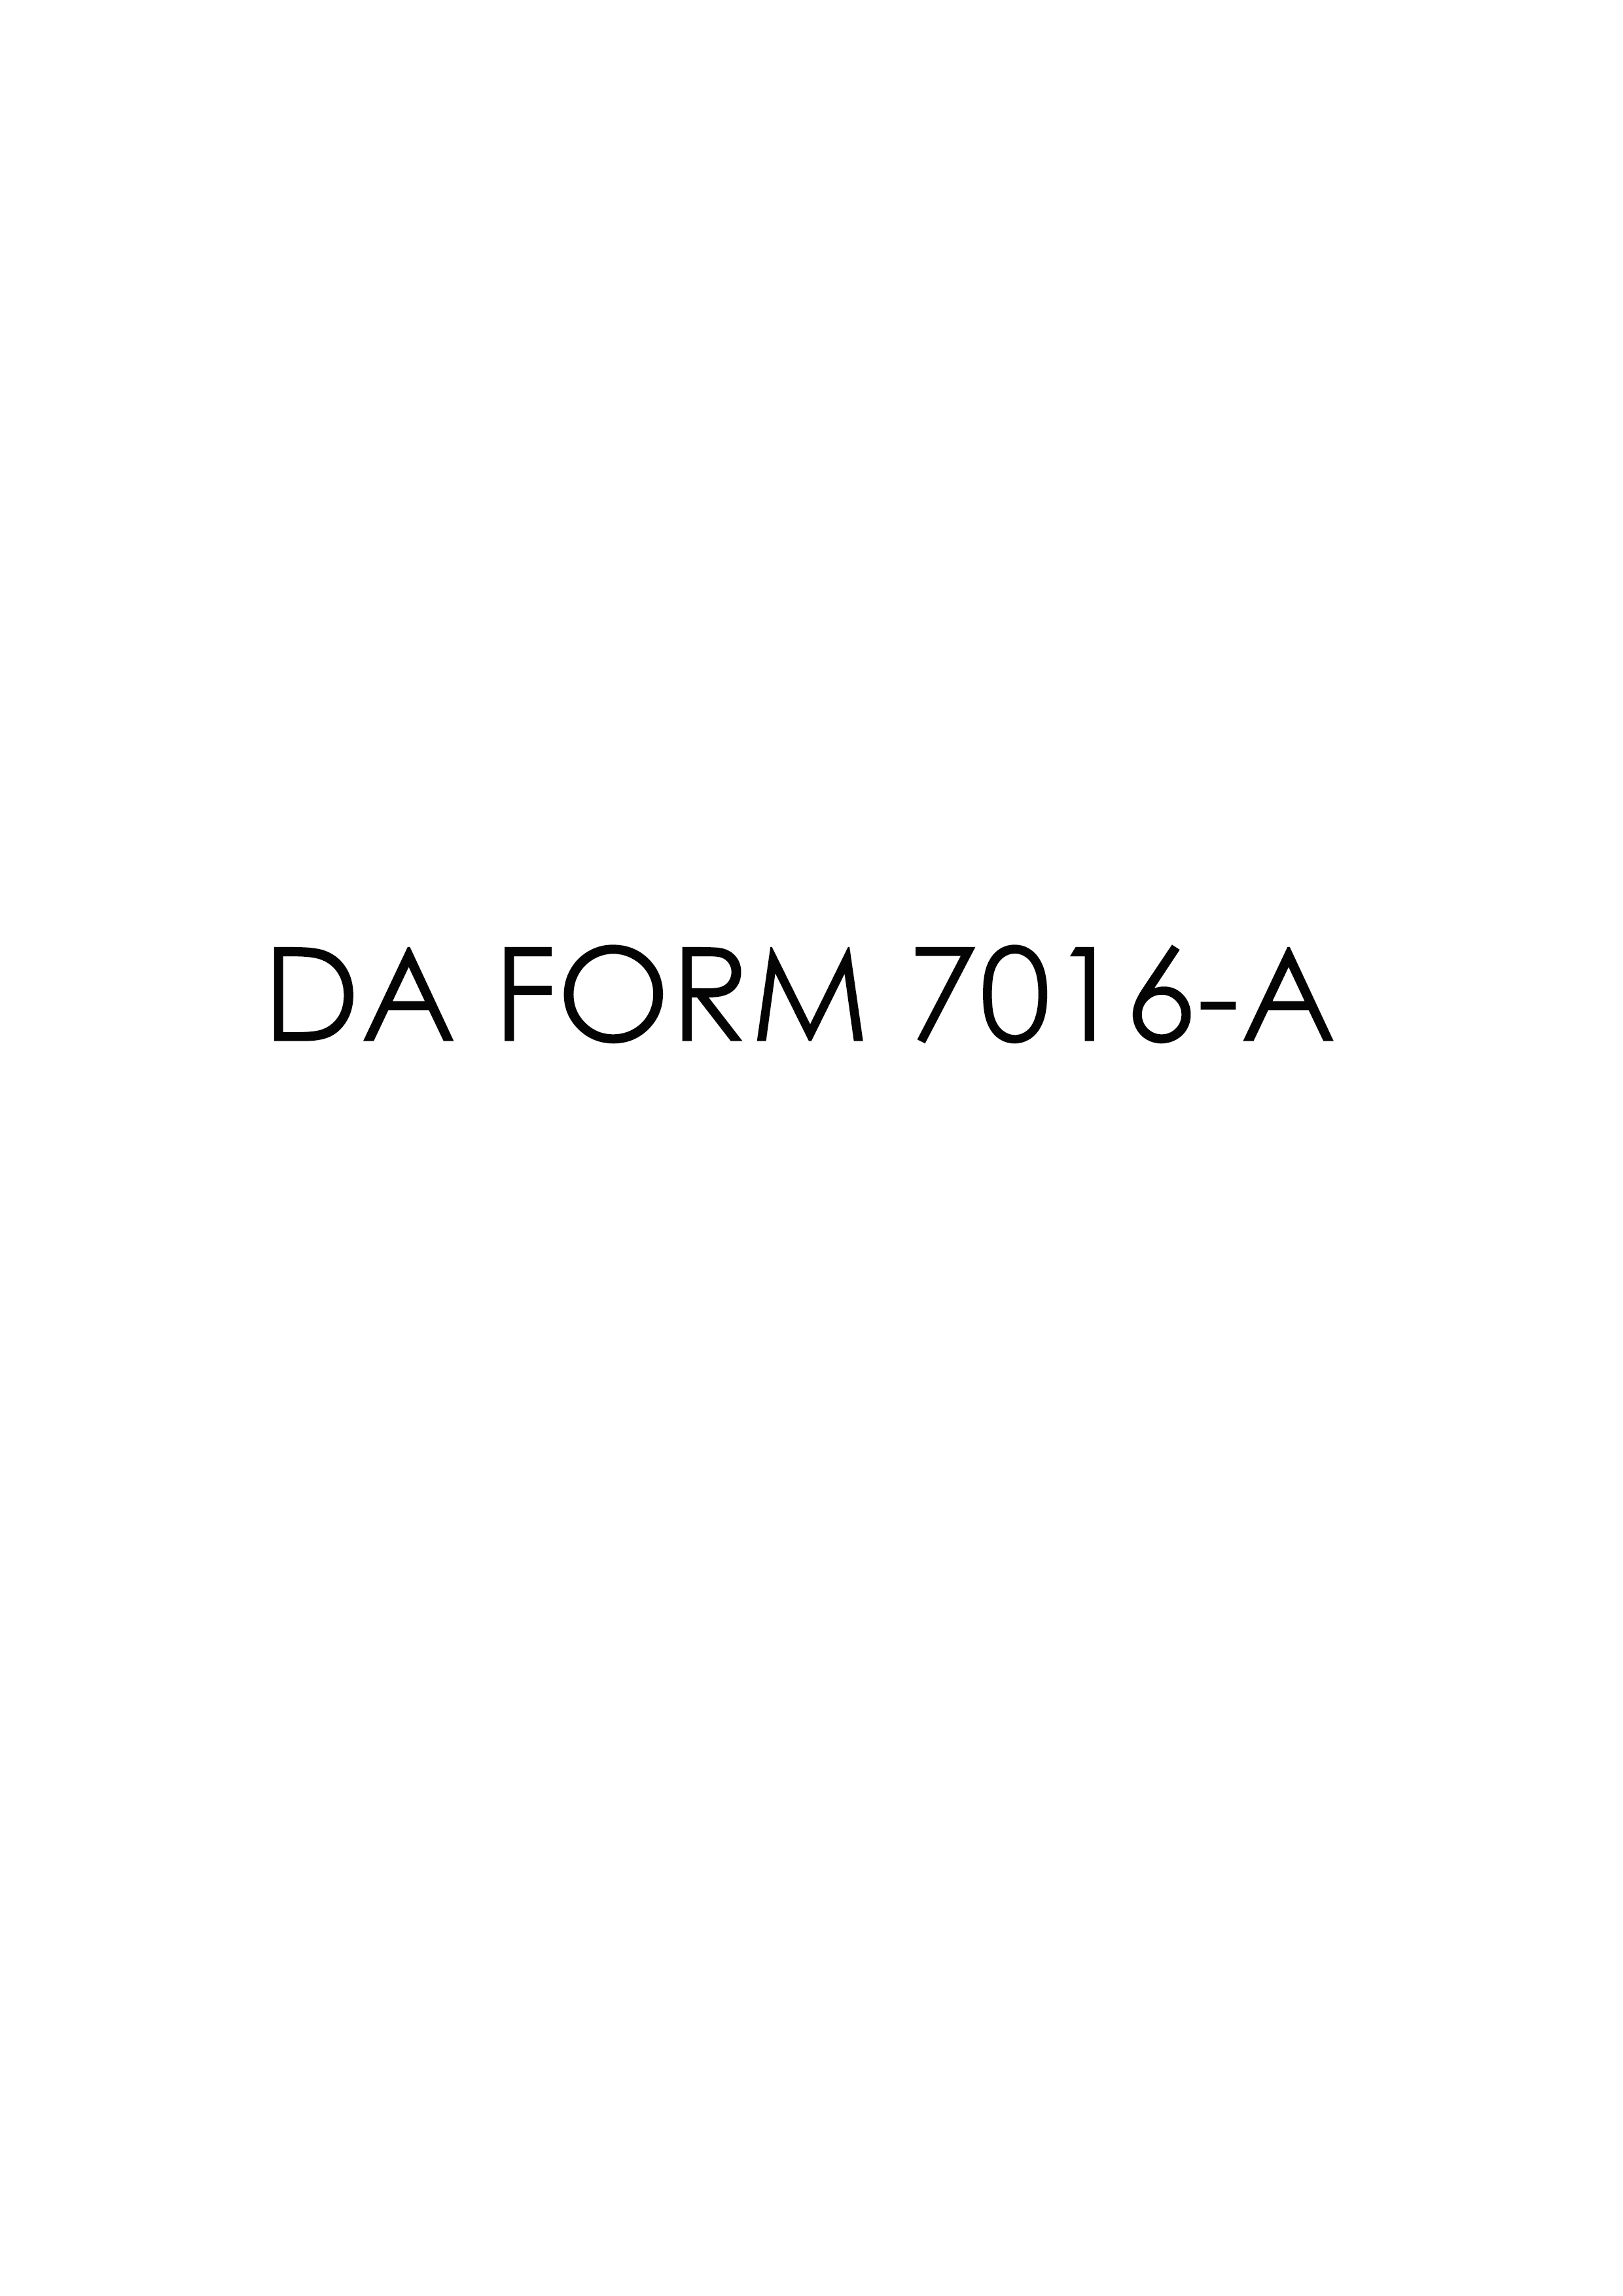 Download Fillable da Form 7016-A